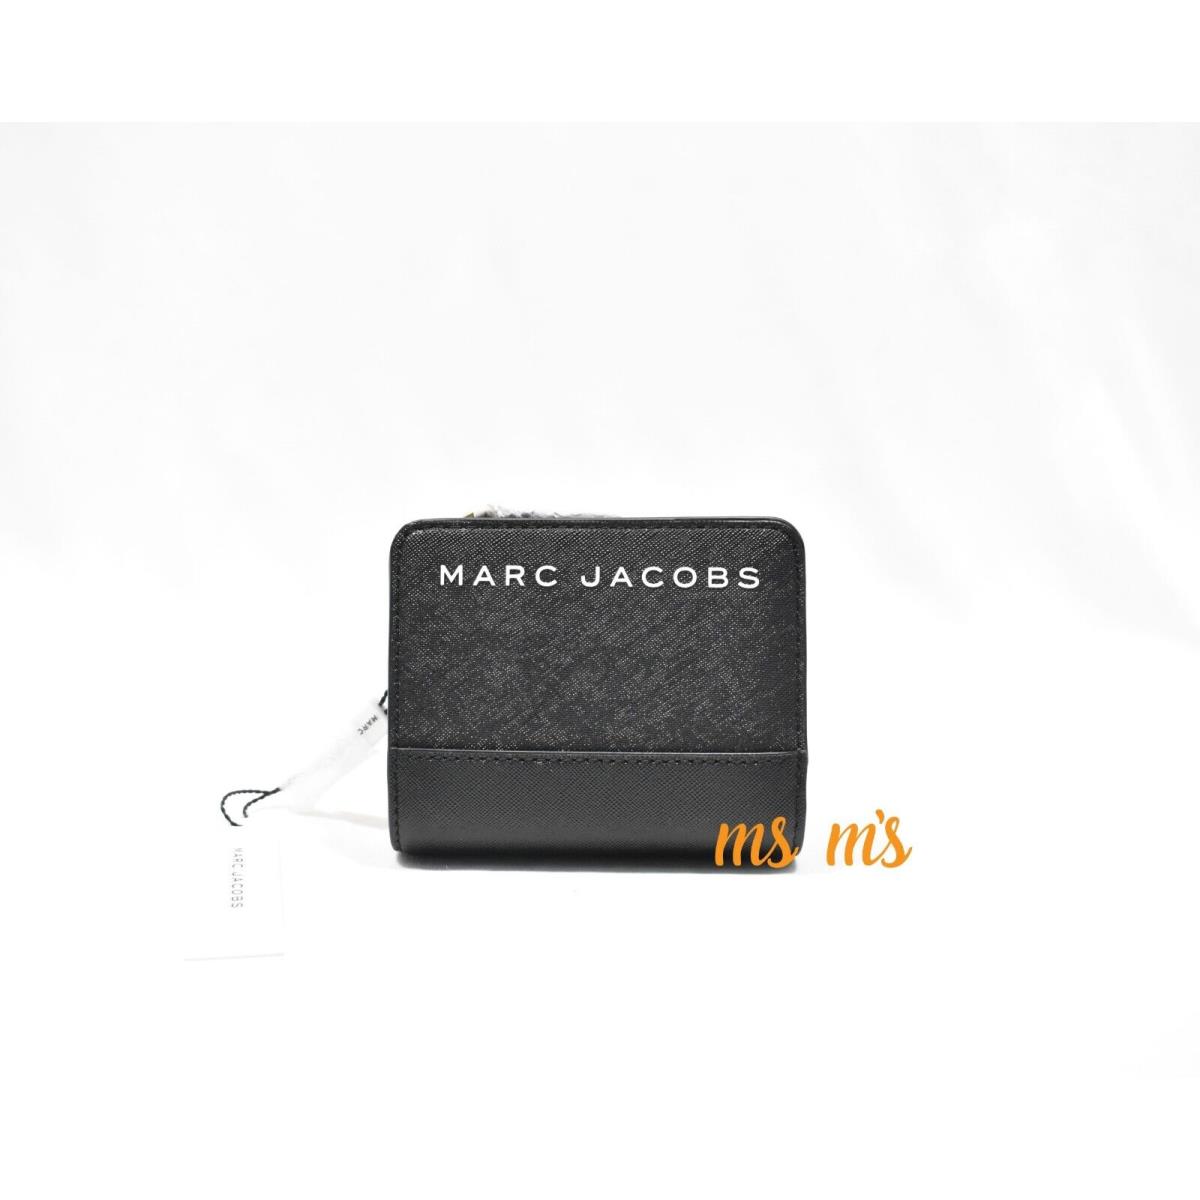 Marc Jacobs Black Saffiano Leather Mini Wallet